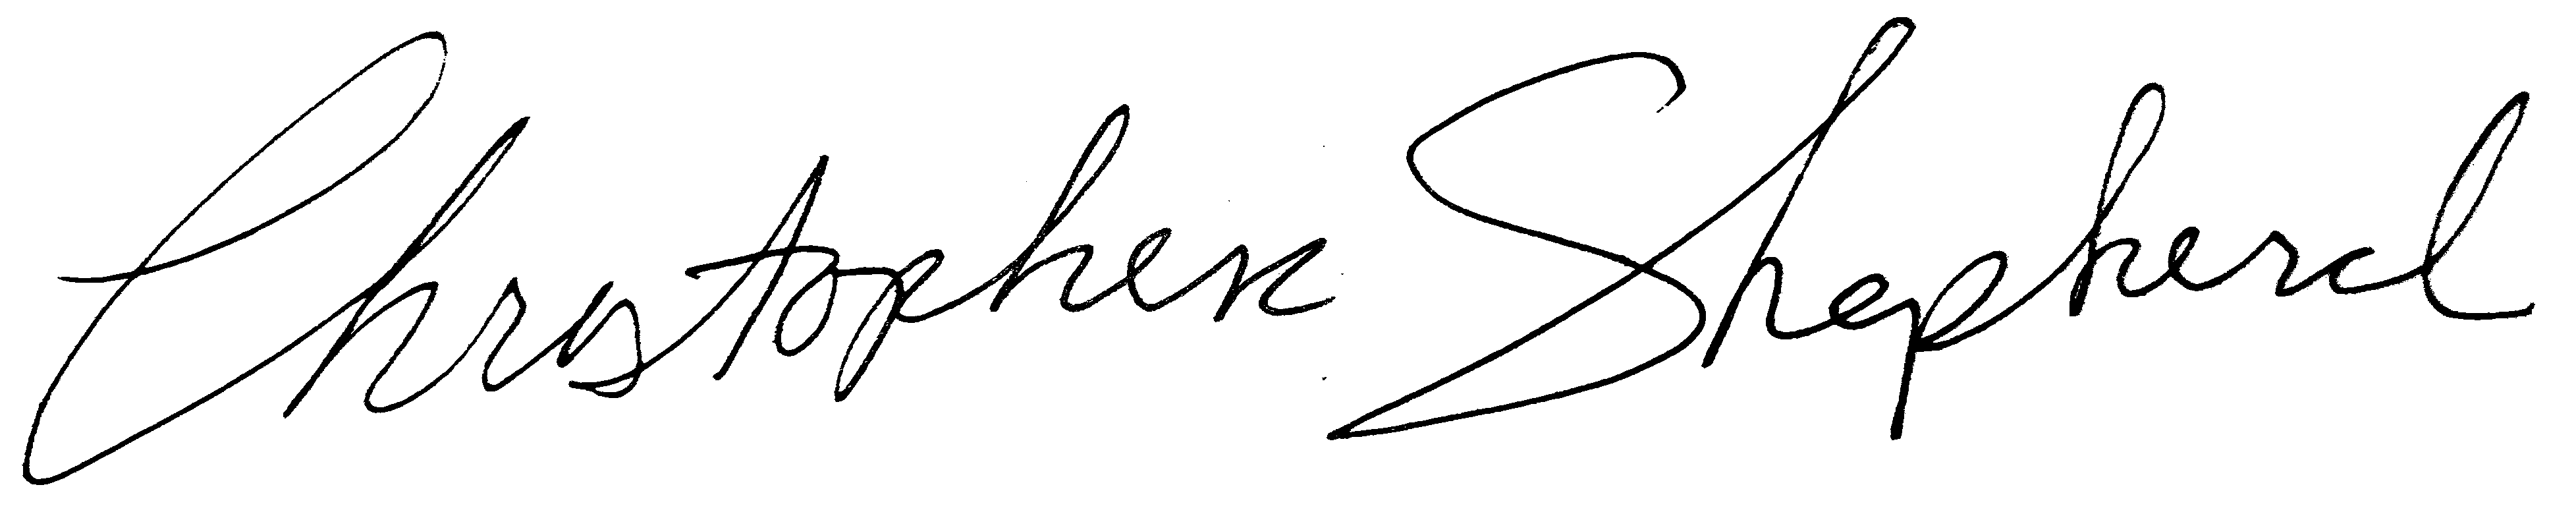 Christopher Shepherd's signature